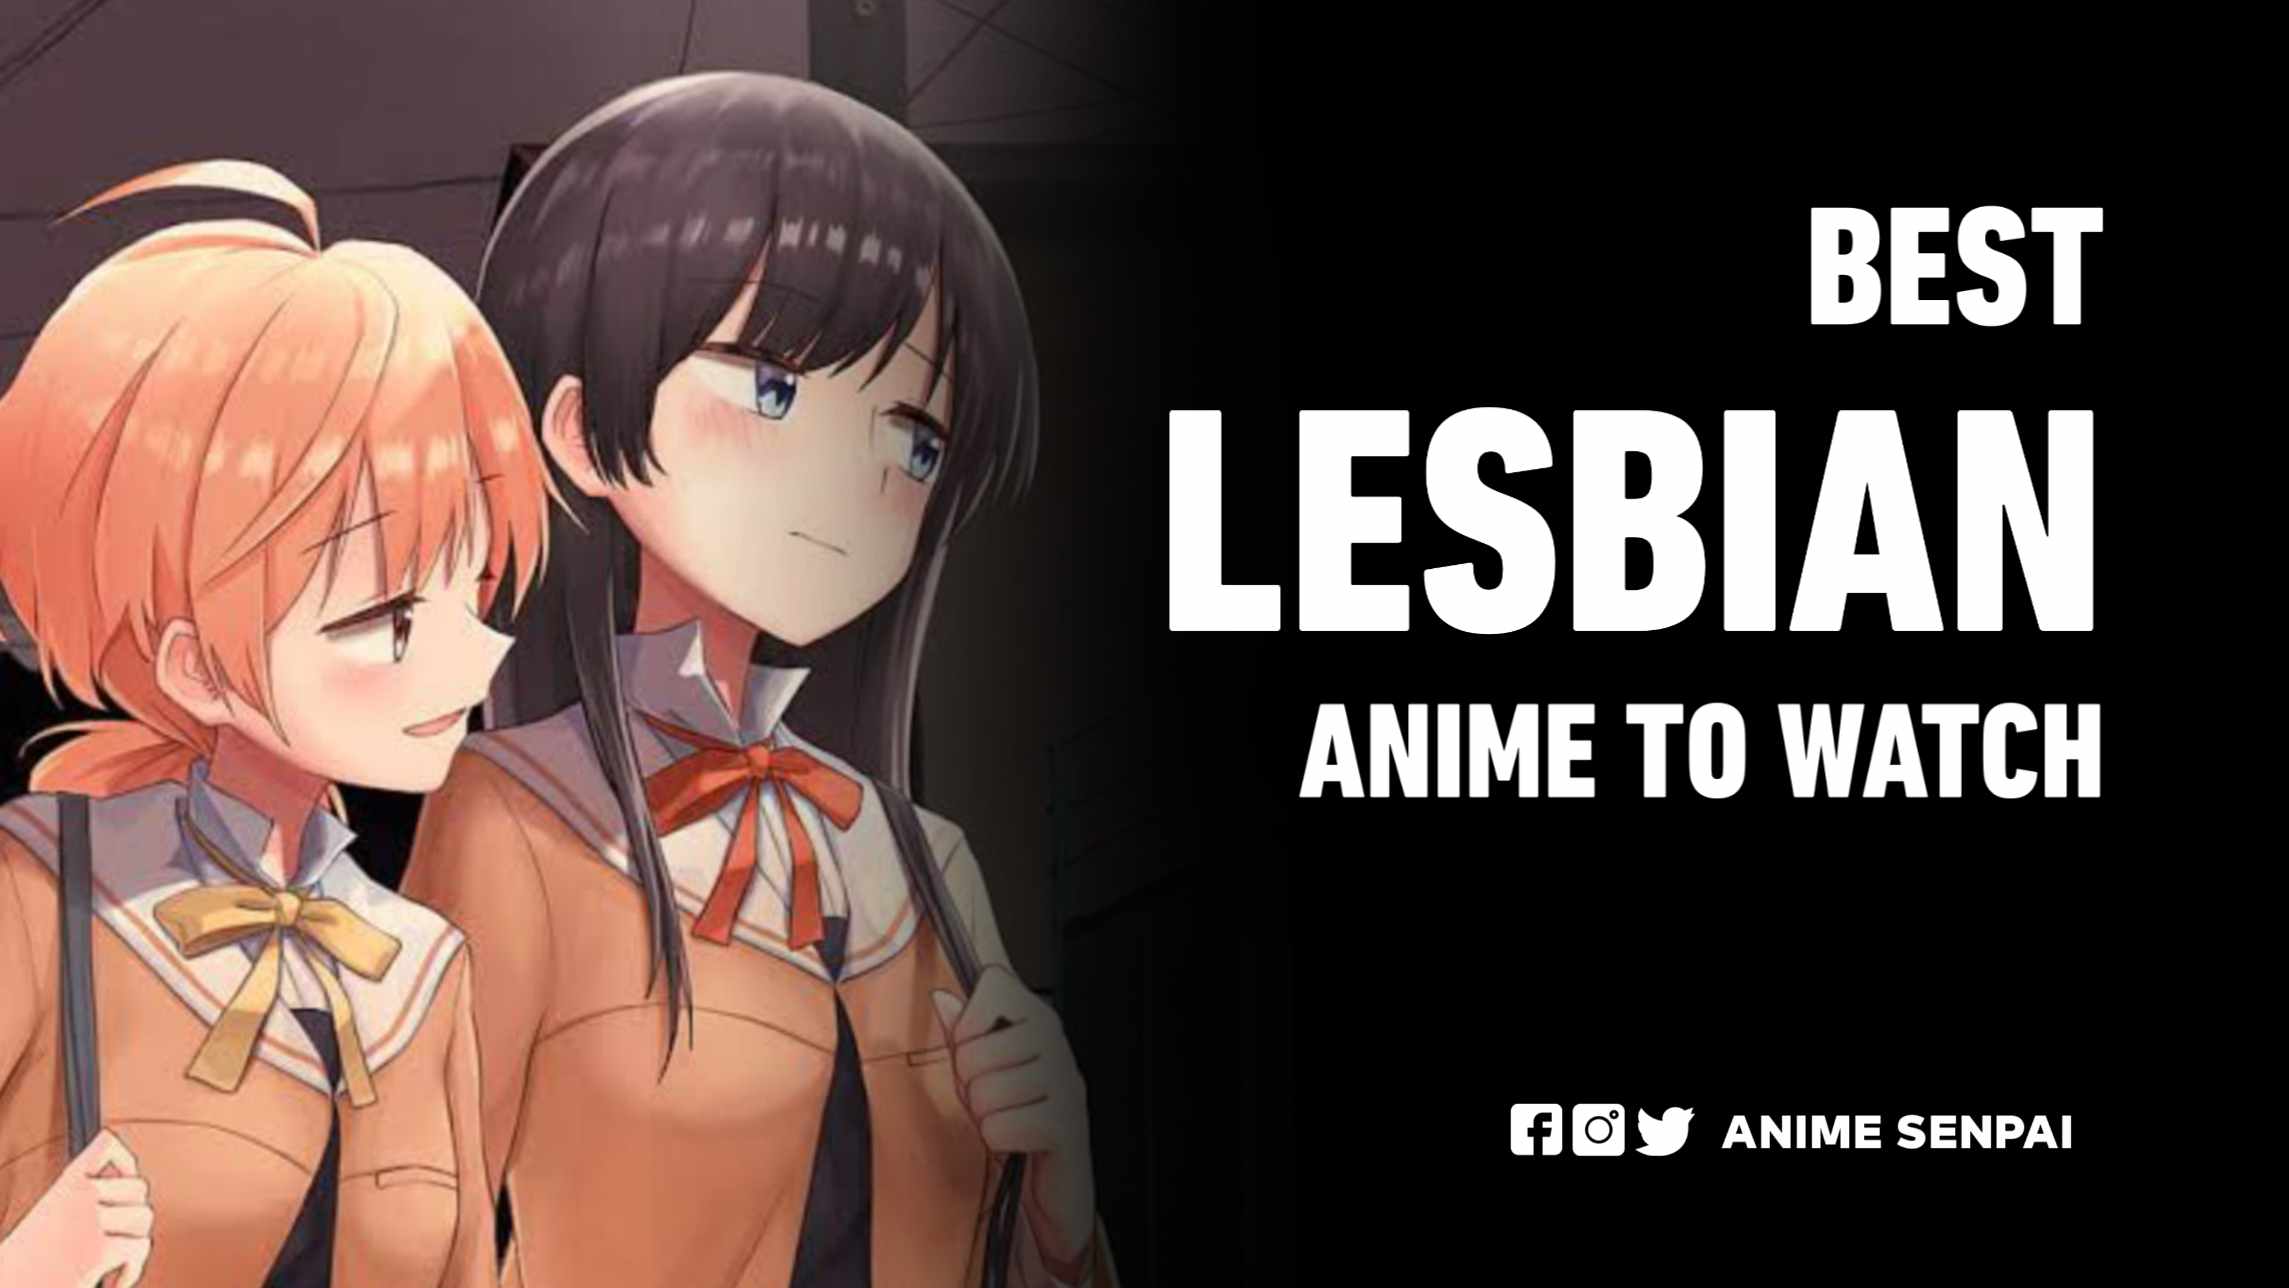 daniela stefan recommends erotic lesbian anime pic